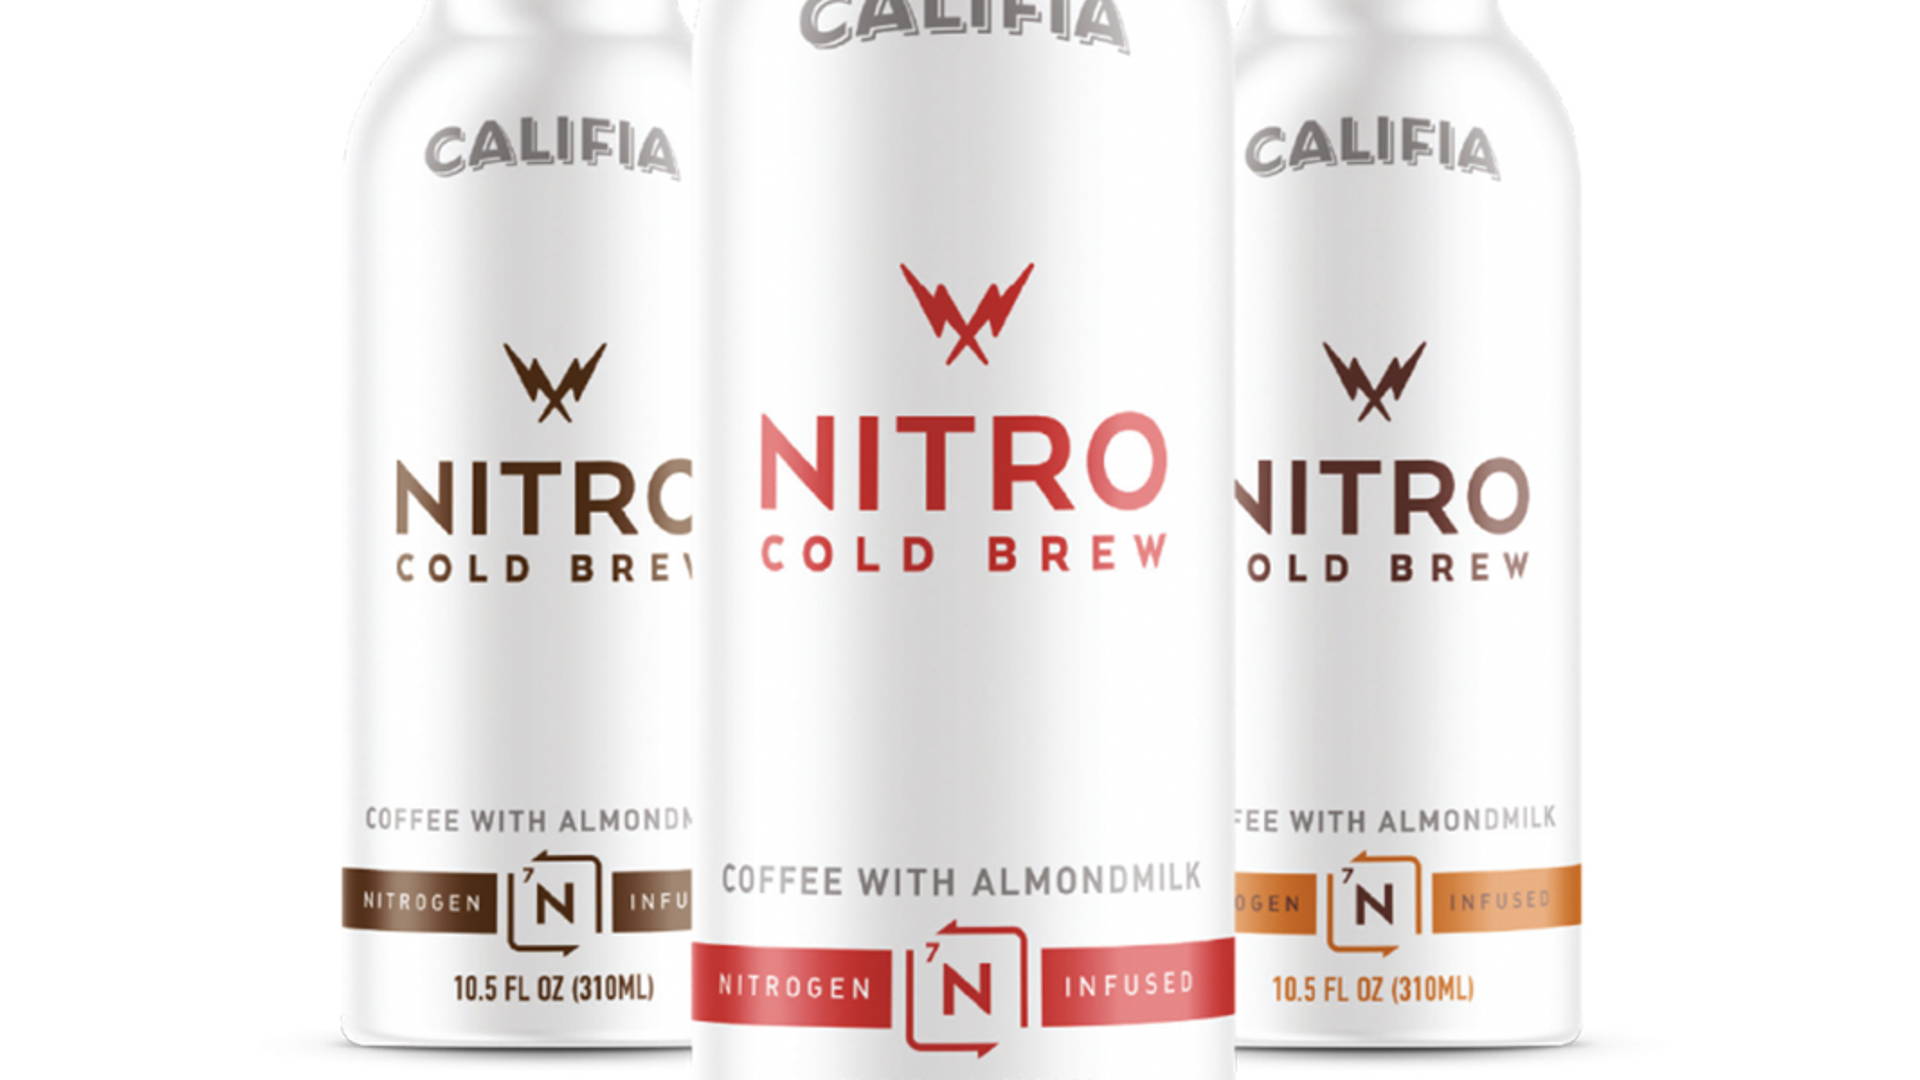 Featured image for Califia Nitro Cold Brew